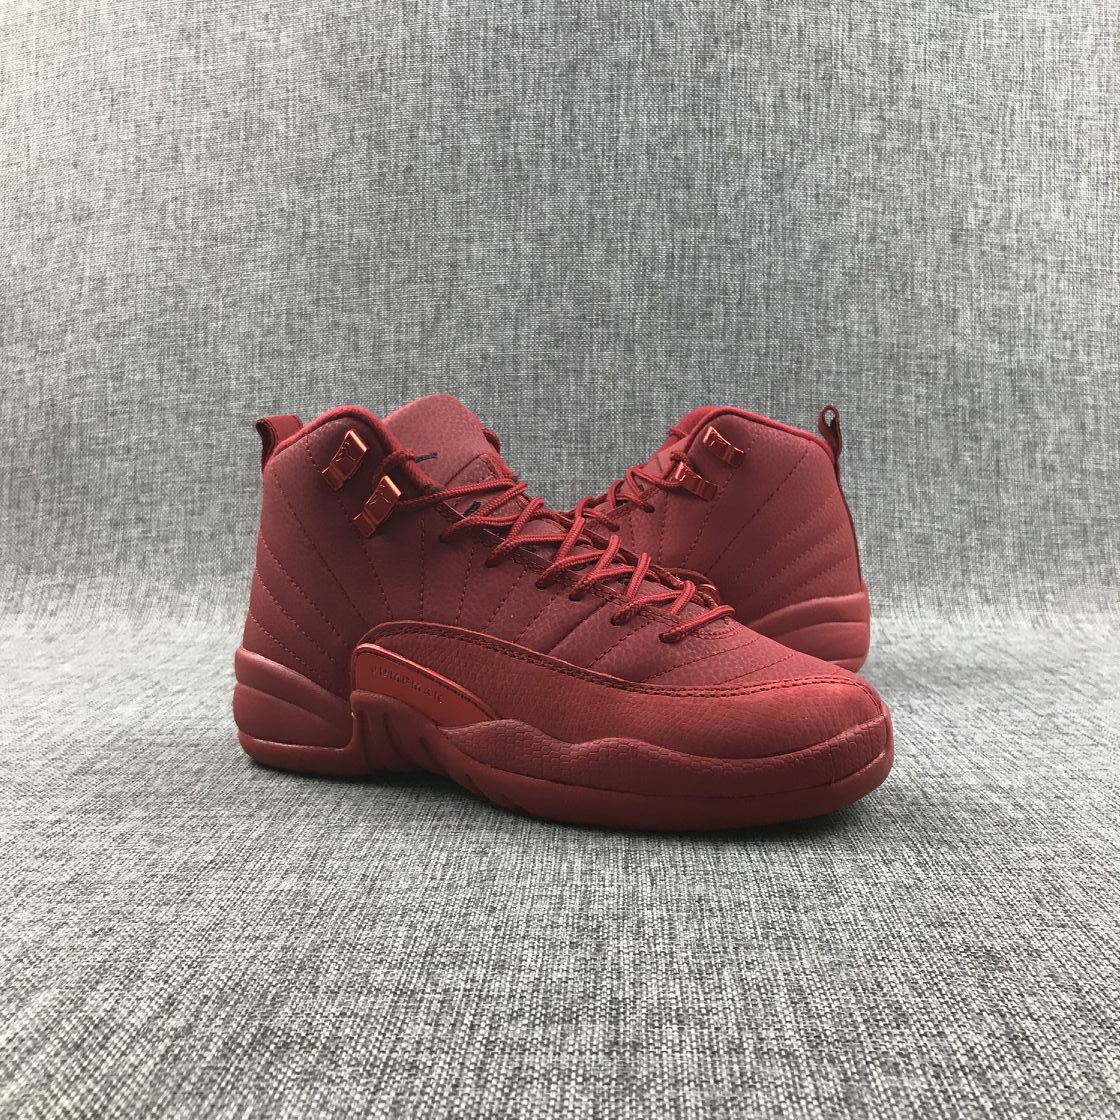 2020 Men Jordan 12 Retro Red Shoes